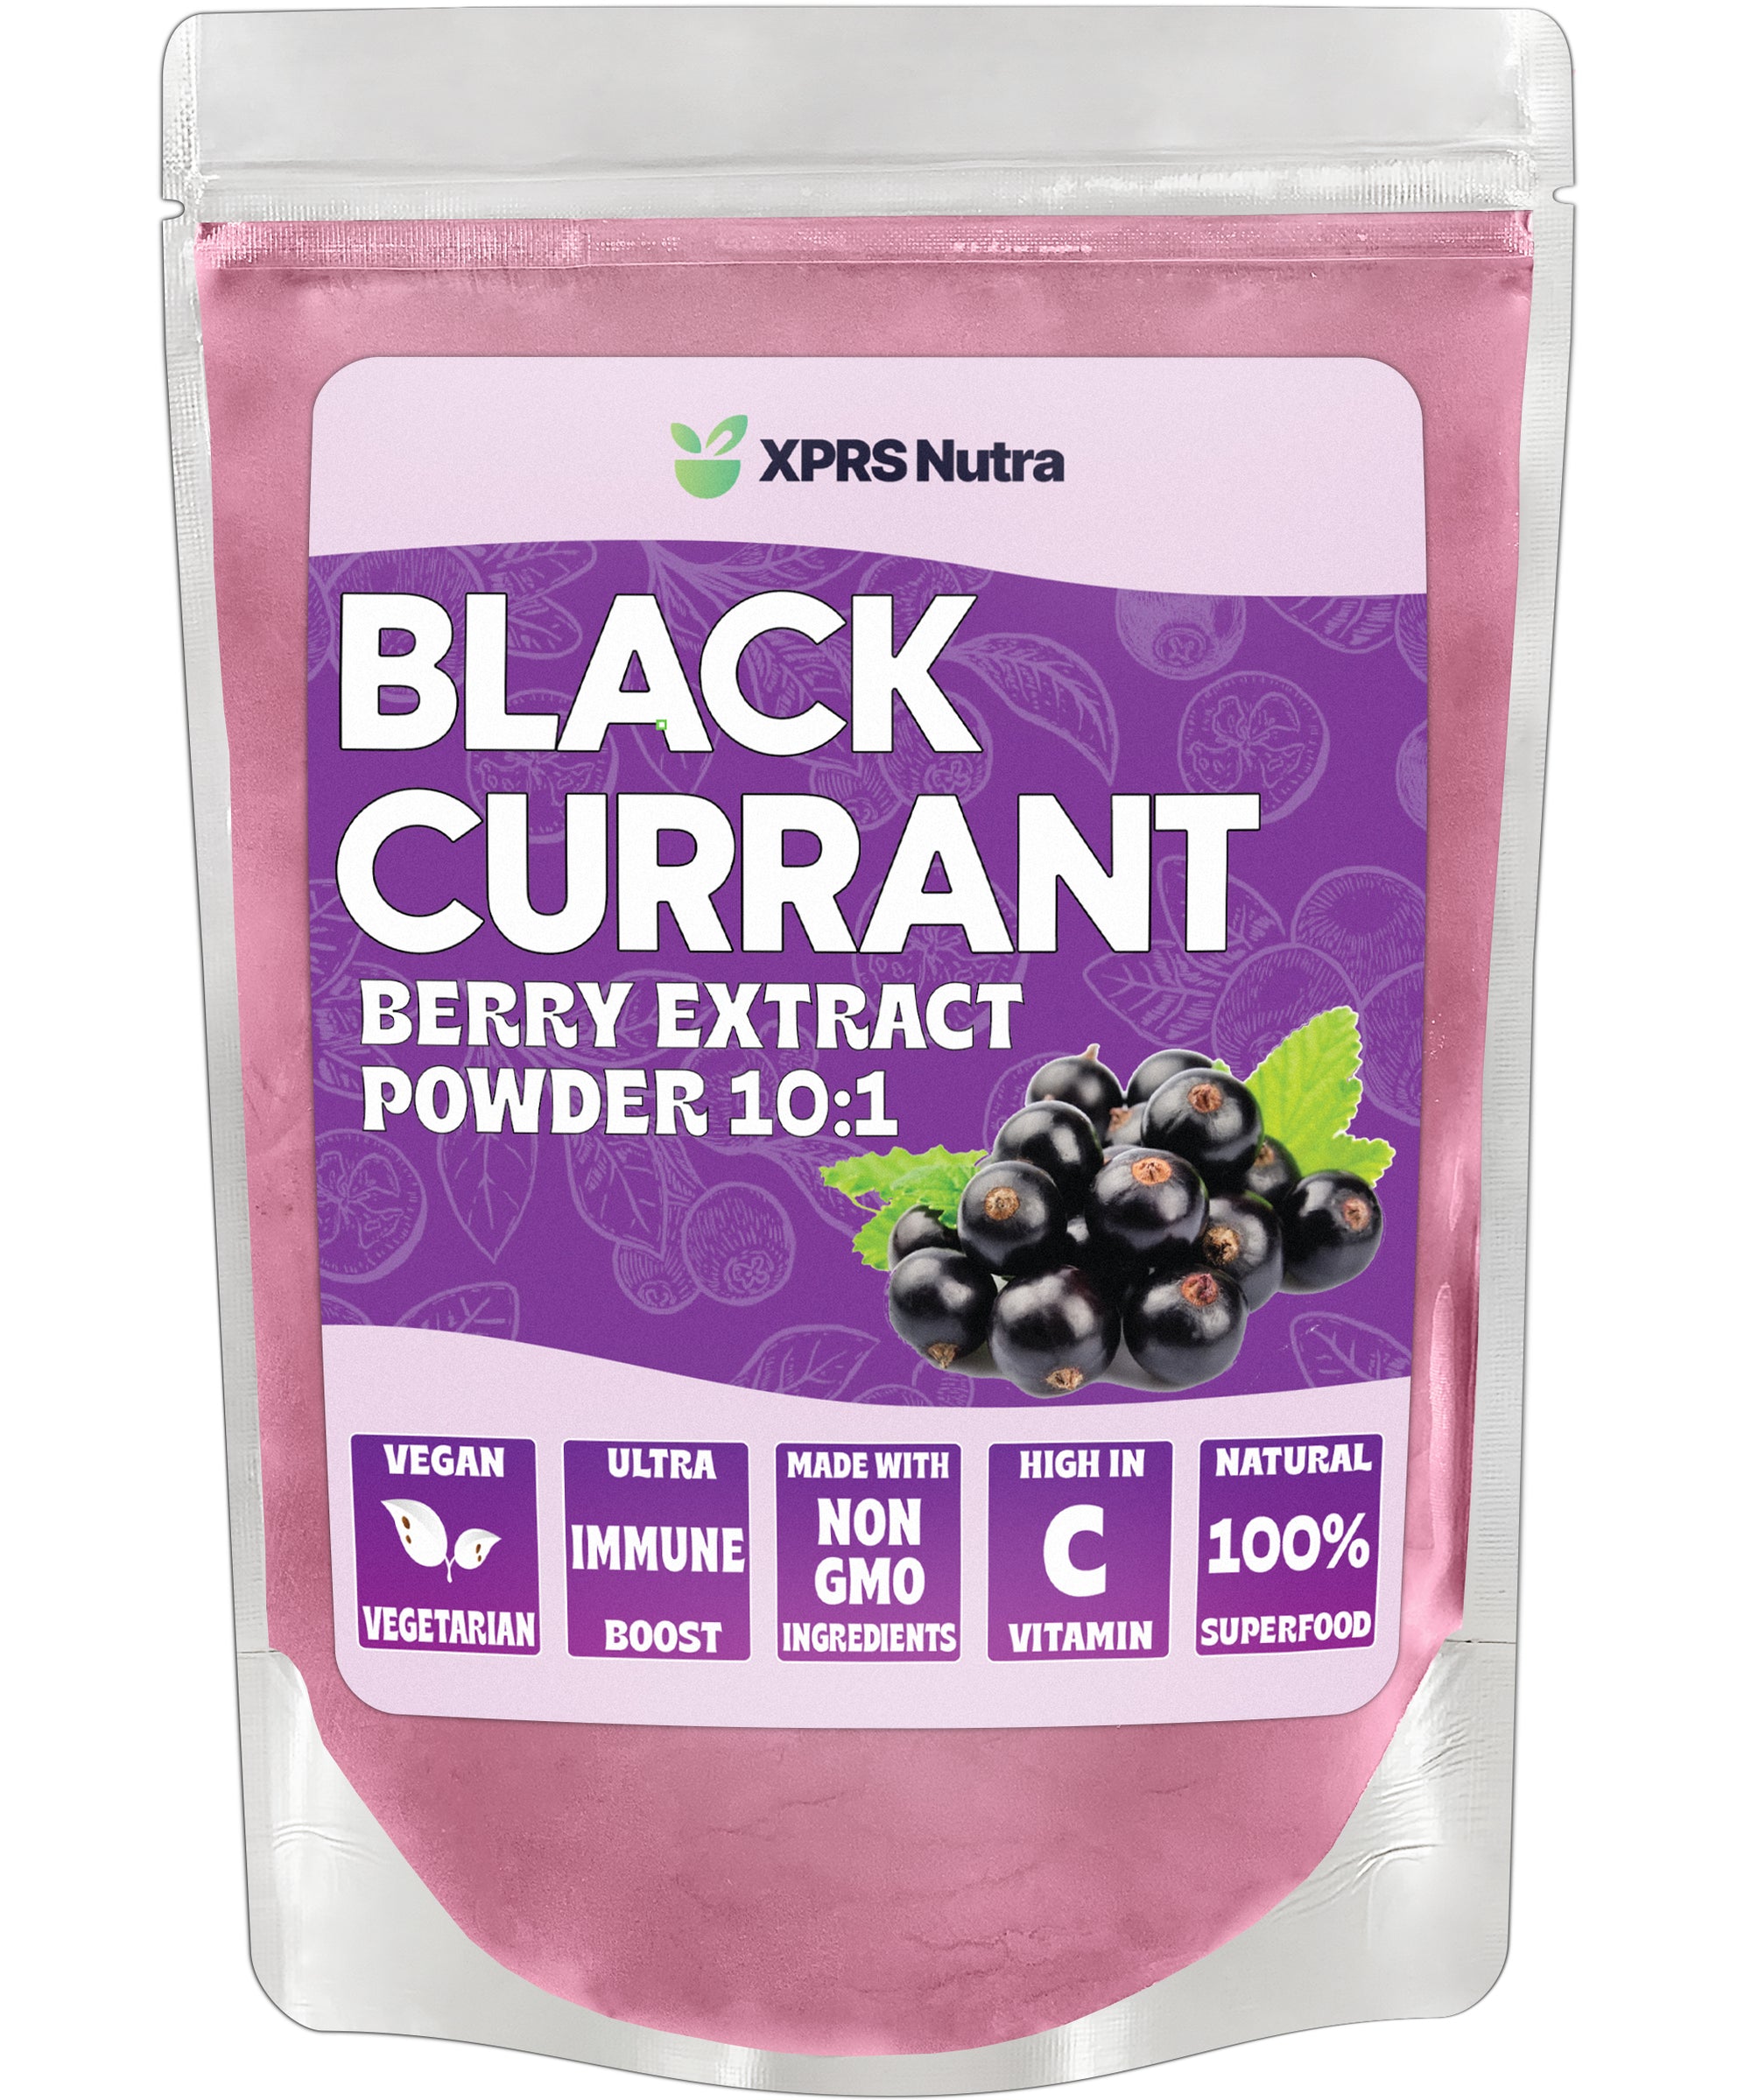 Black Currant Extract Powder 10:1